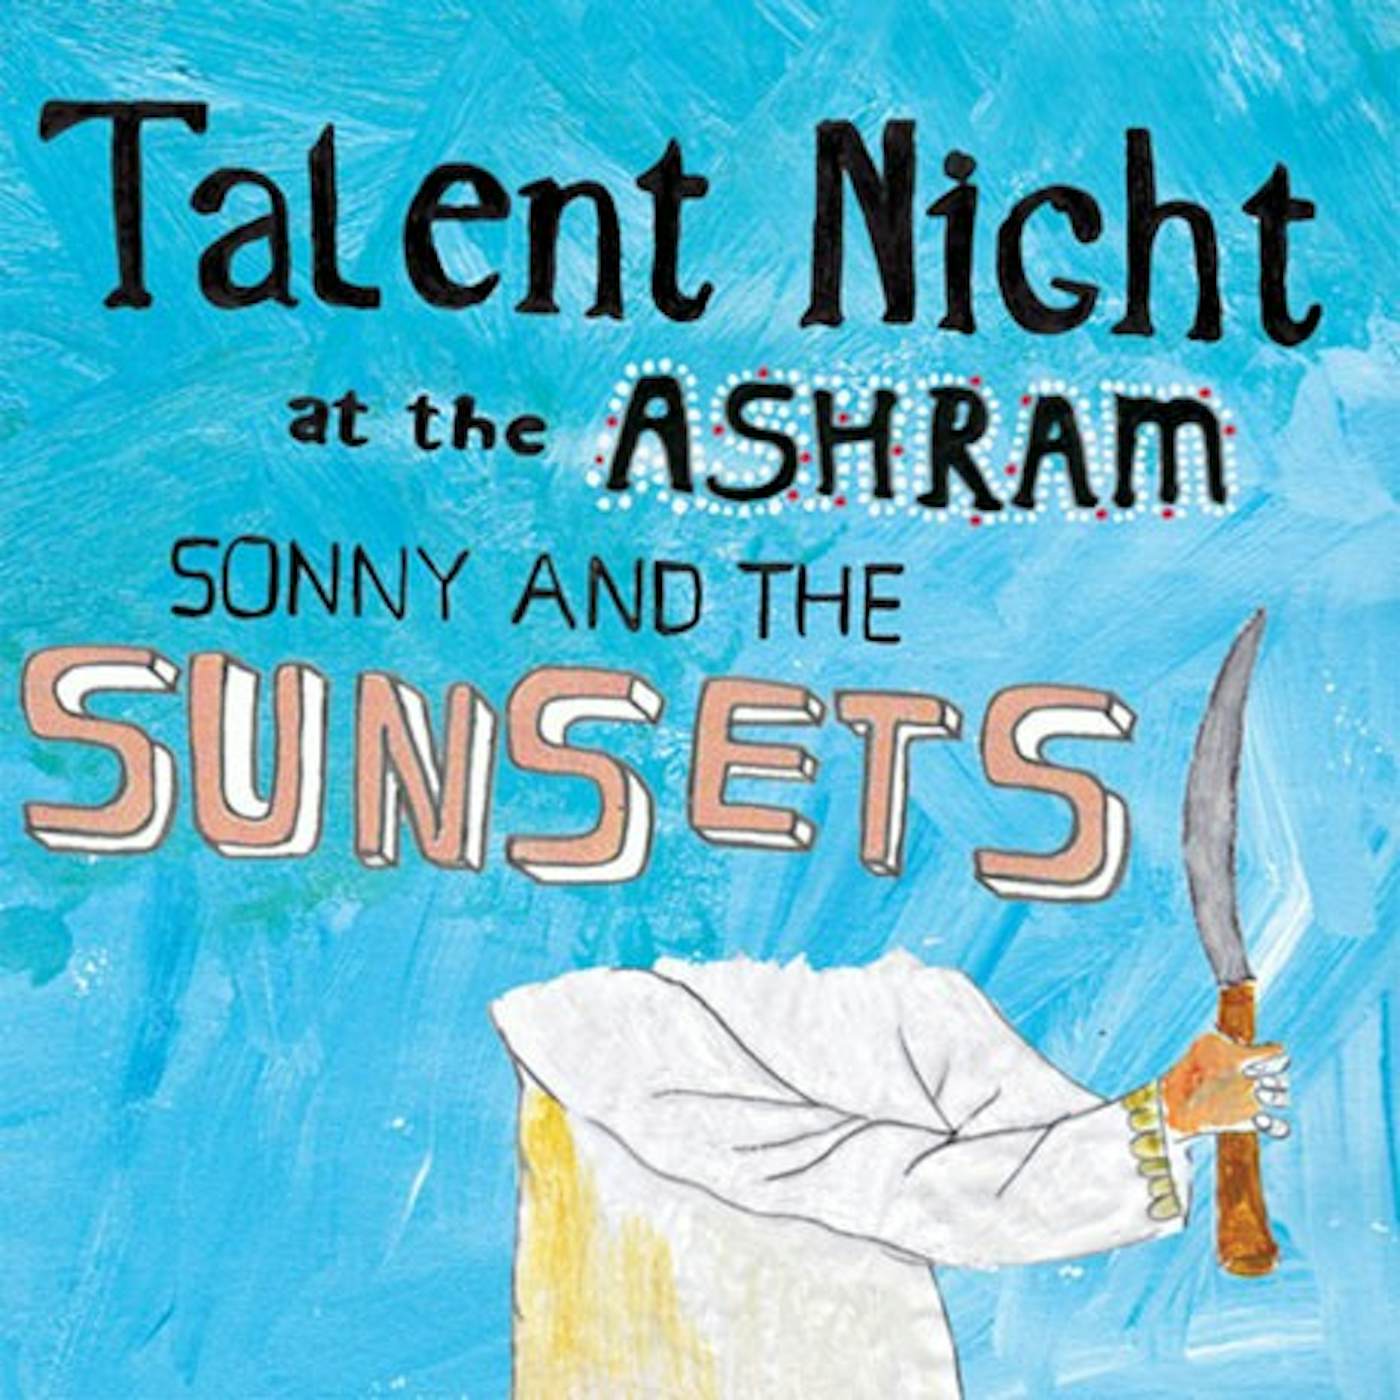 Sonny & The Sunsets Talent Night at the Ashram (Vinyl)